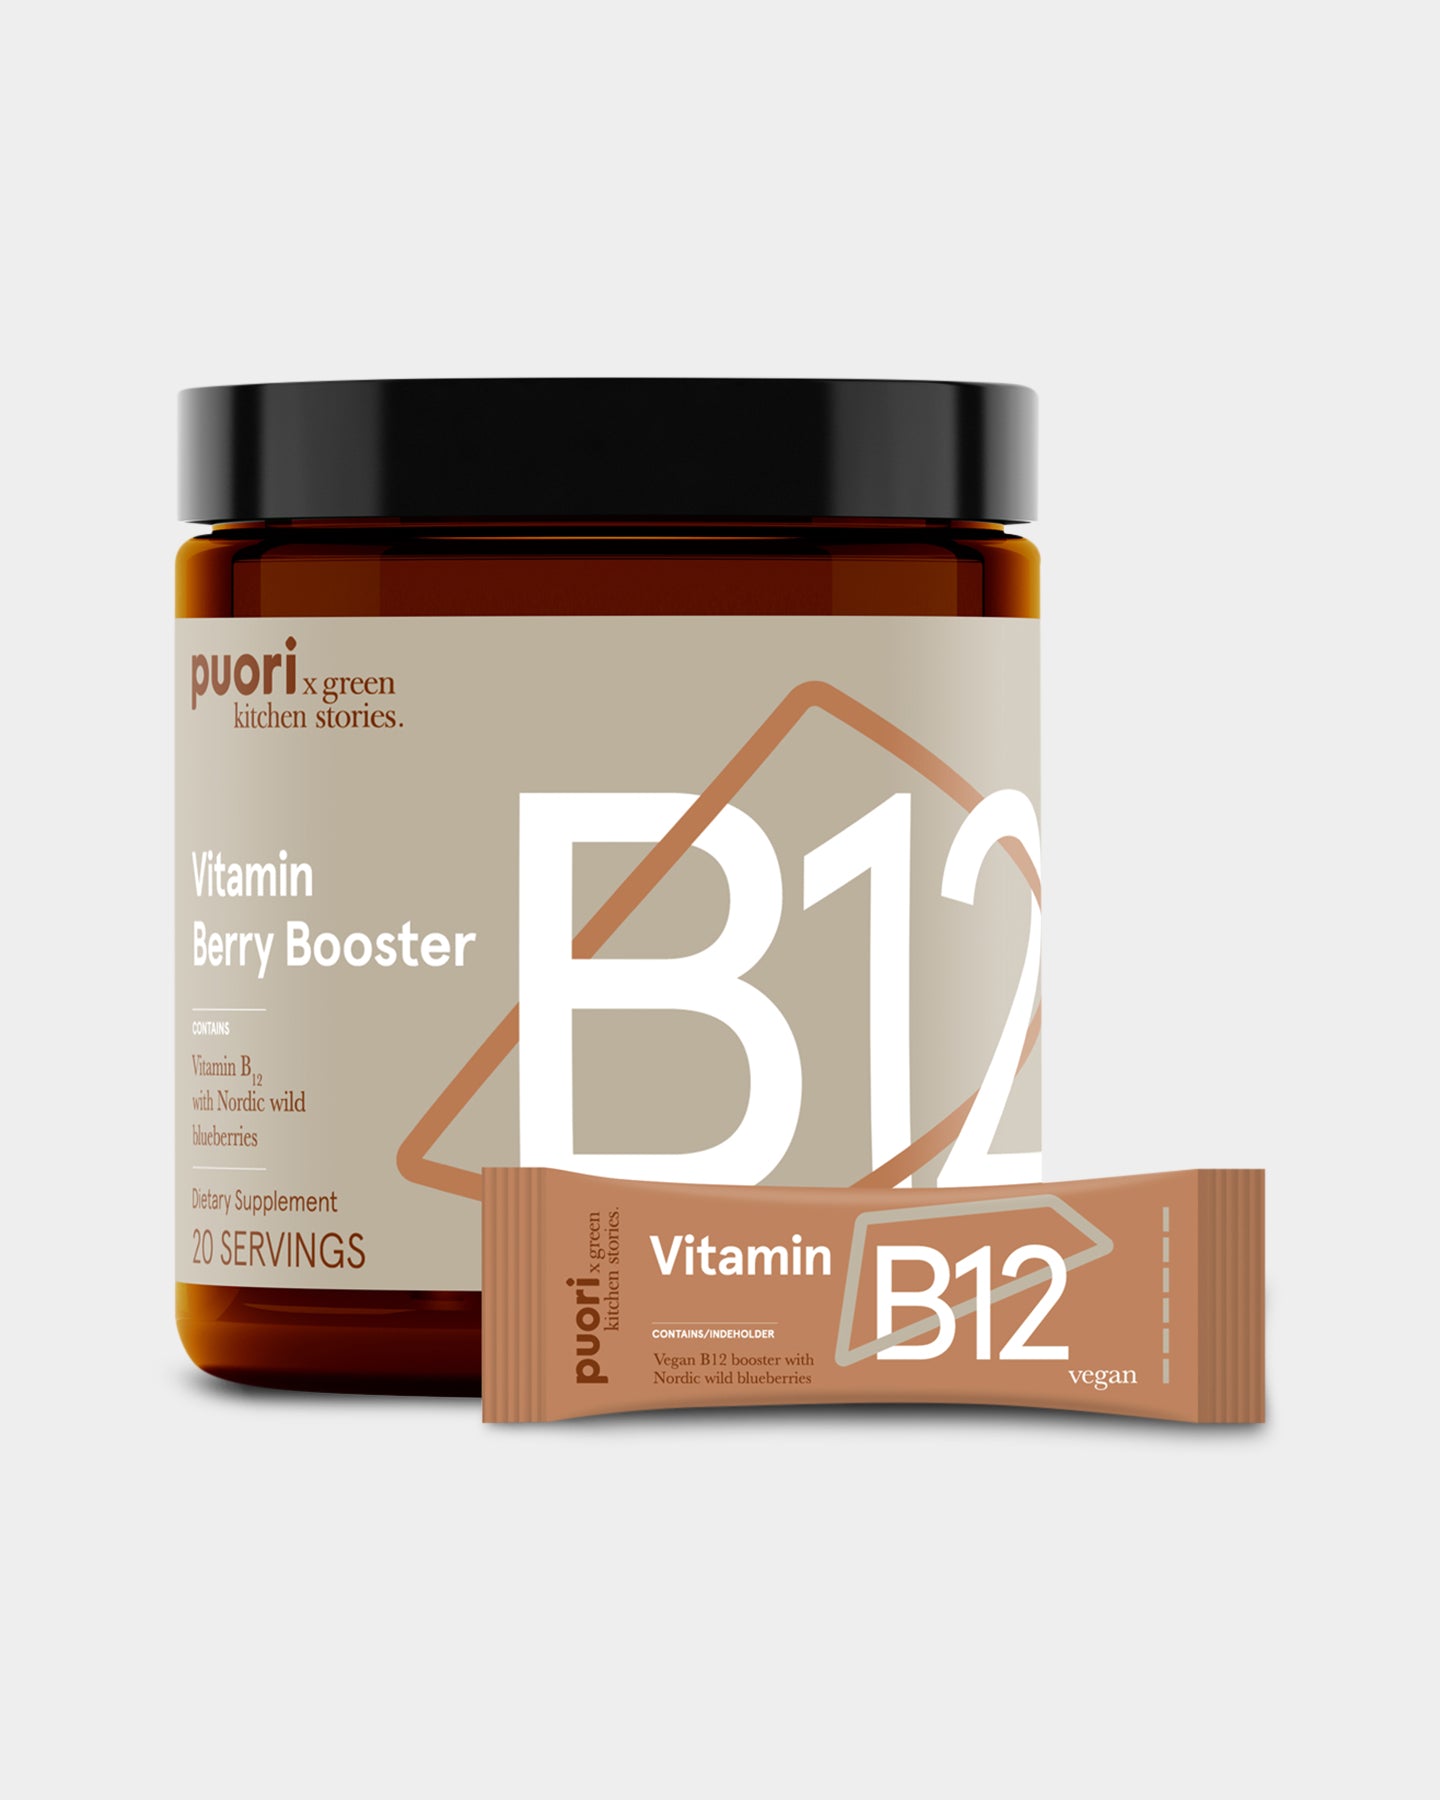 Image of Puori B12 Vitamin Berry Booster